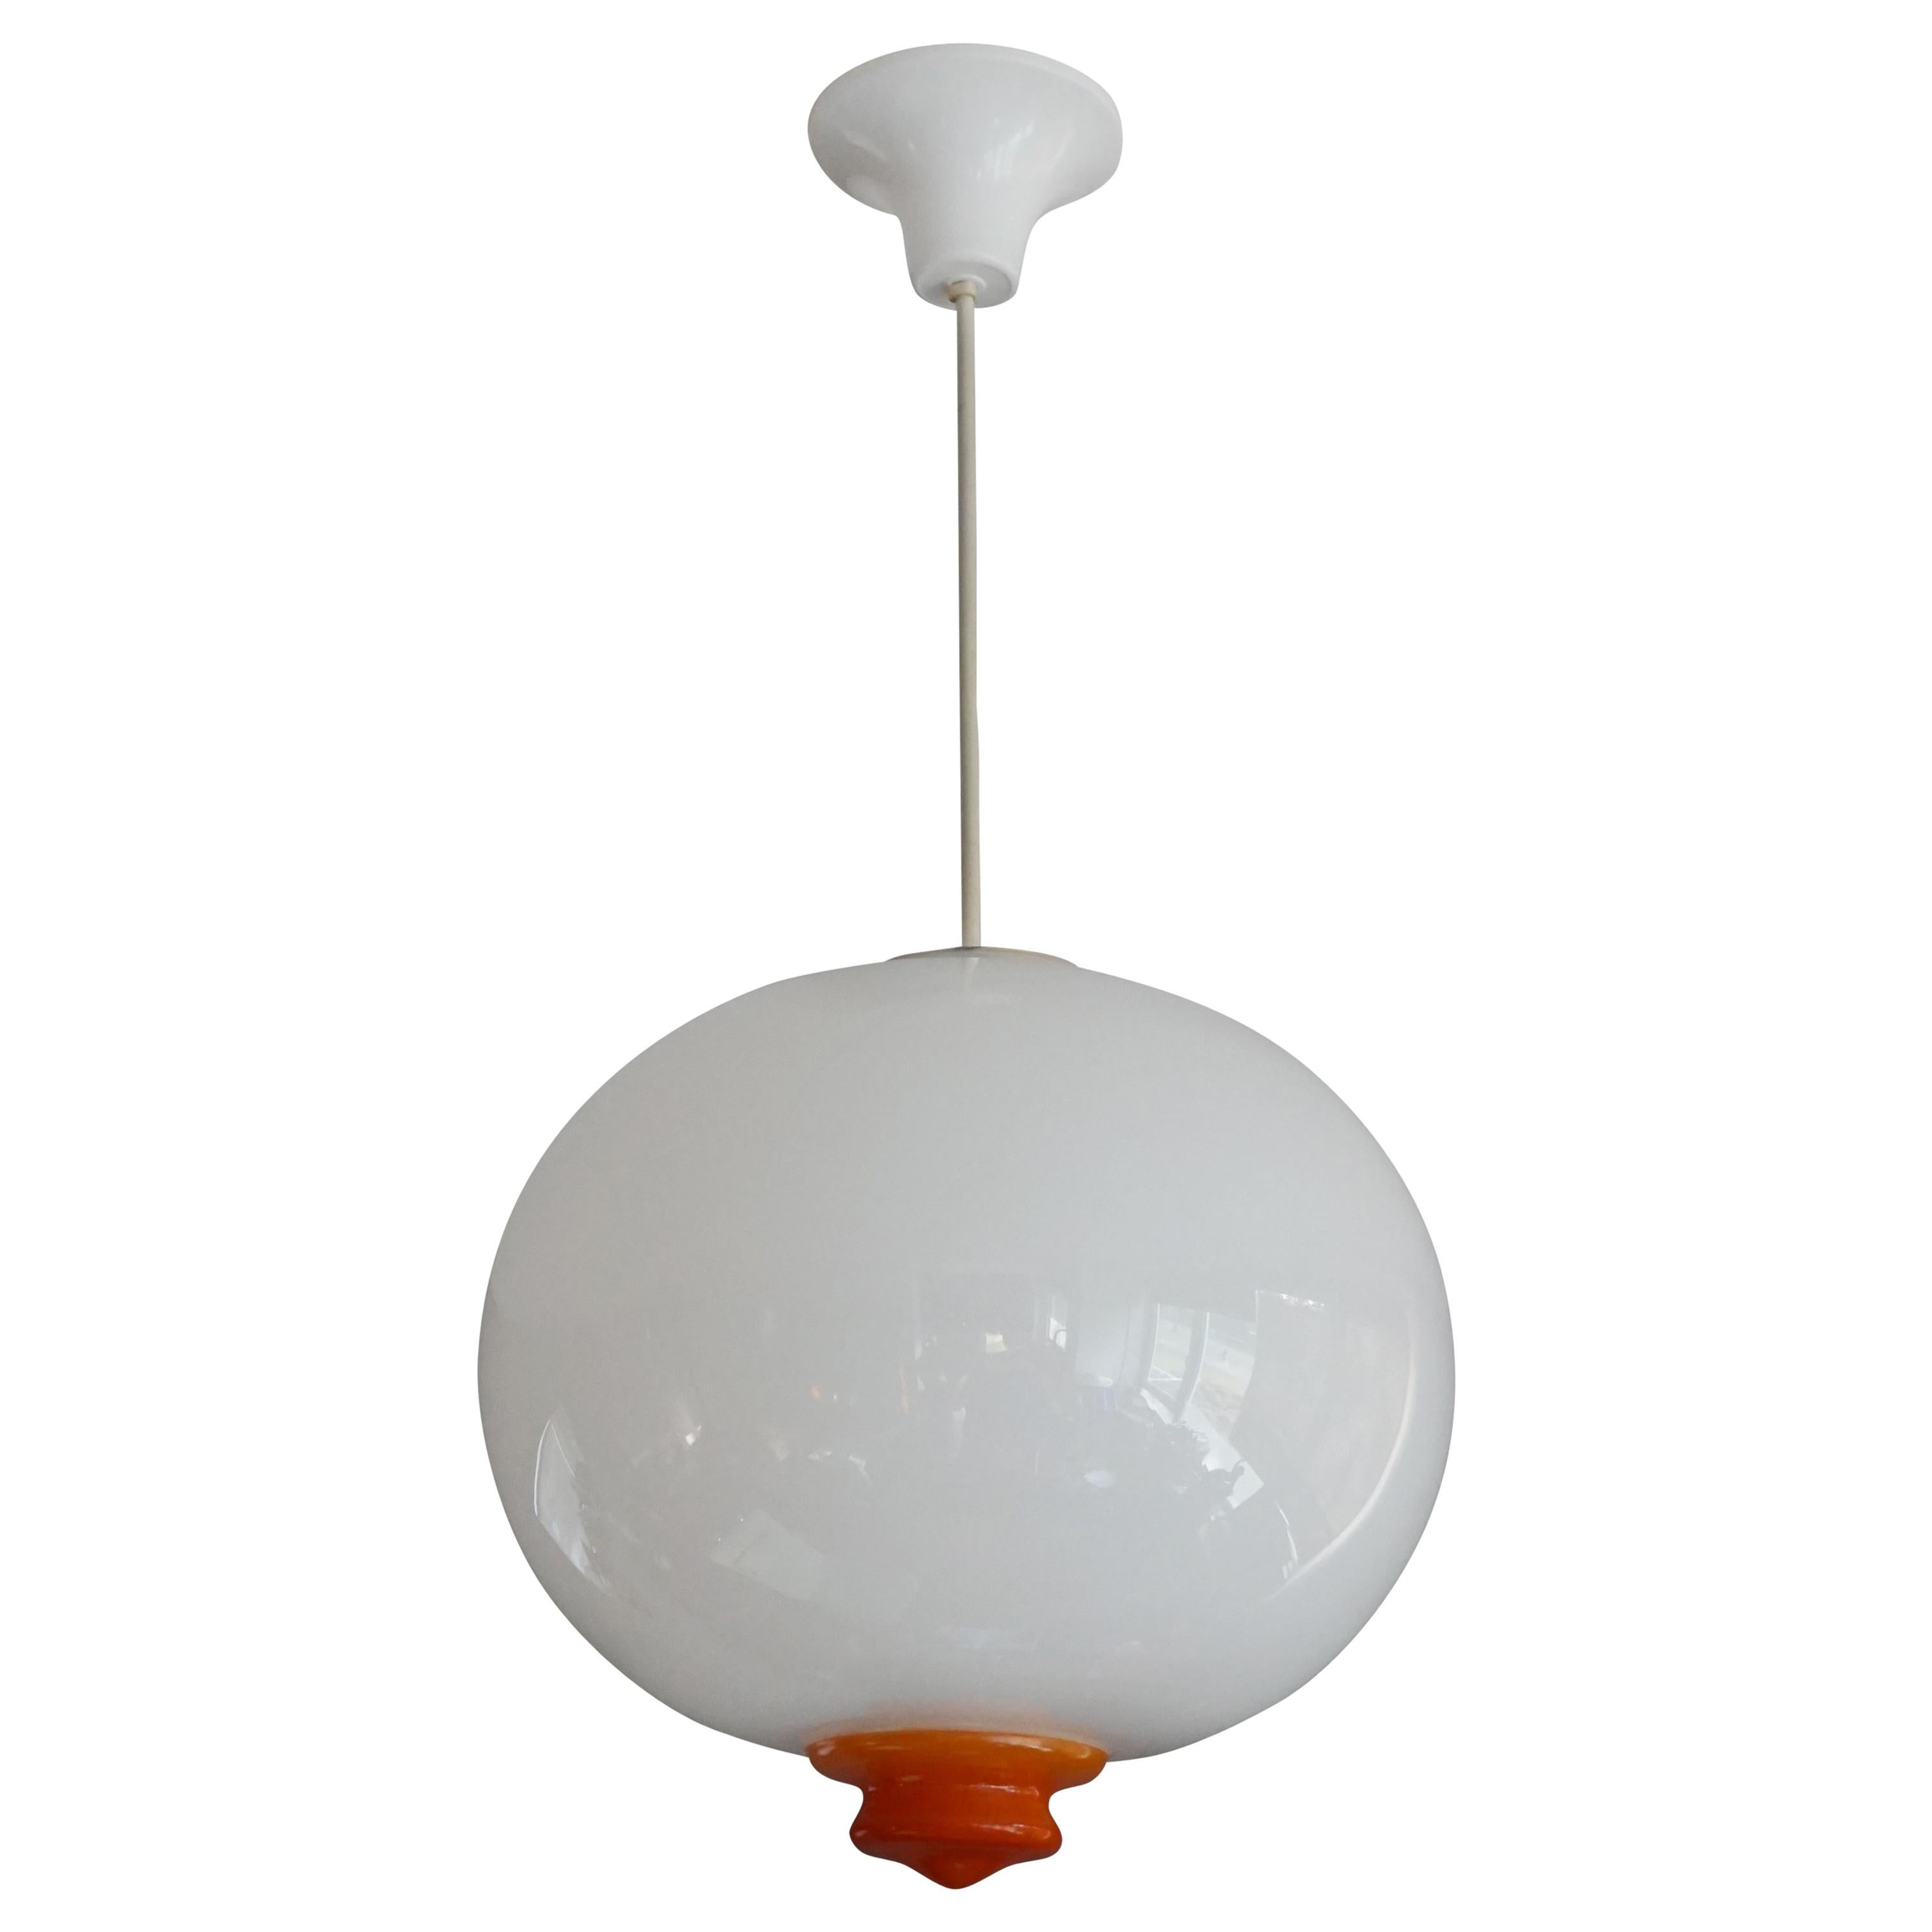 Perfect White and Vibrant Orange Mid-Century Modern Pendant / Light Fixture